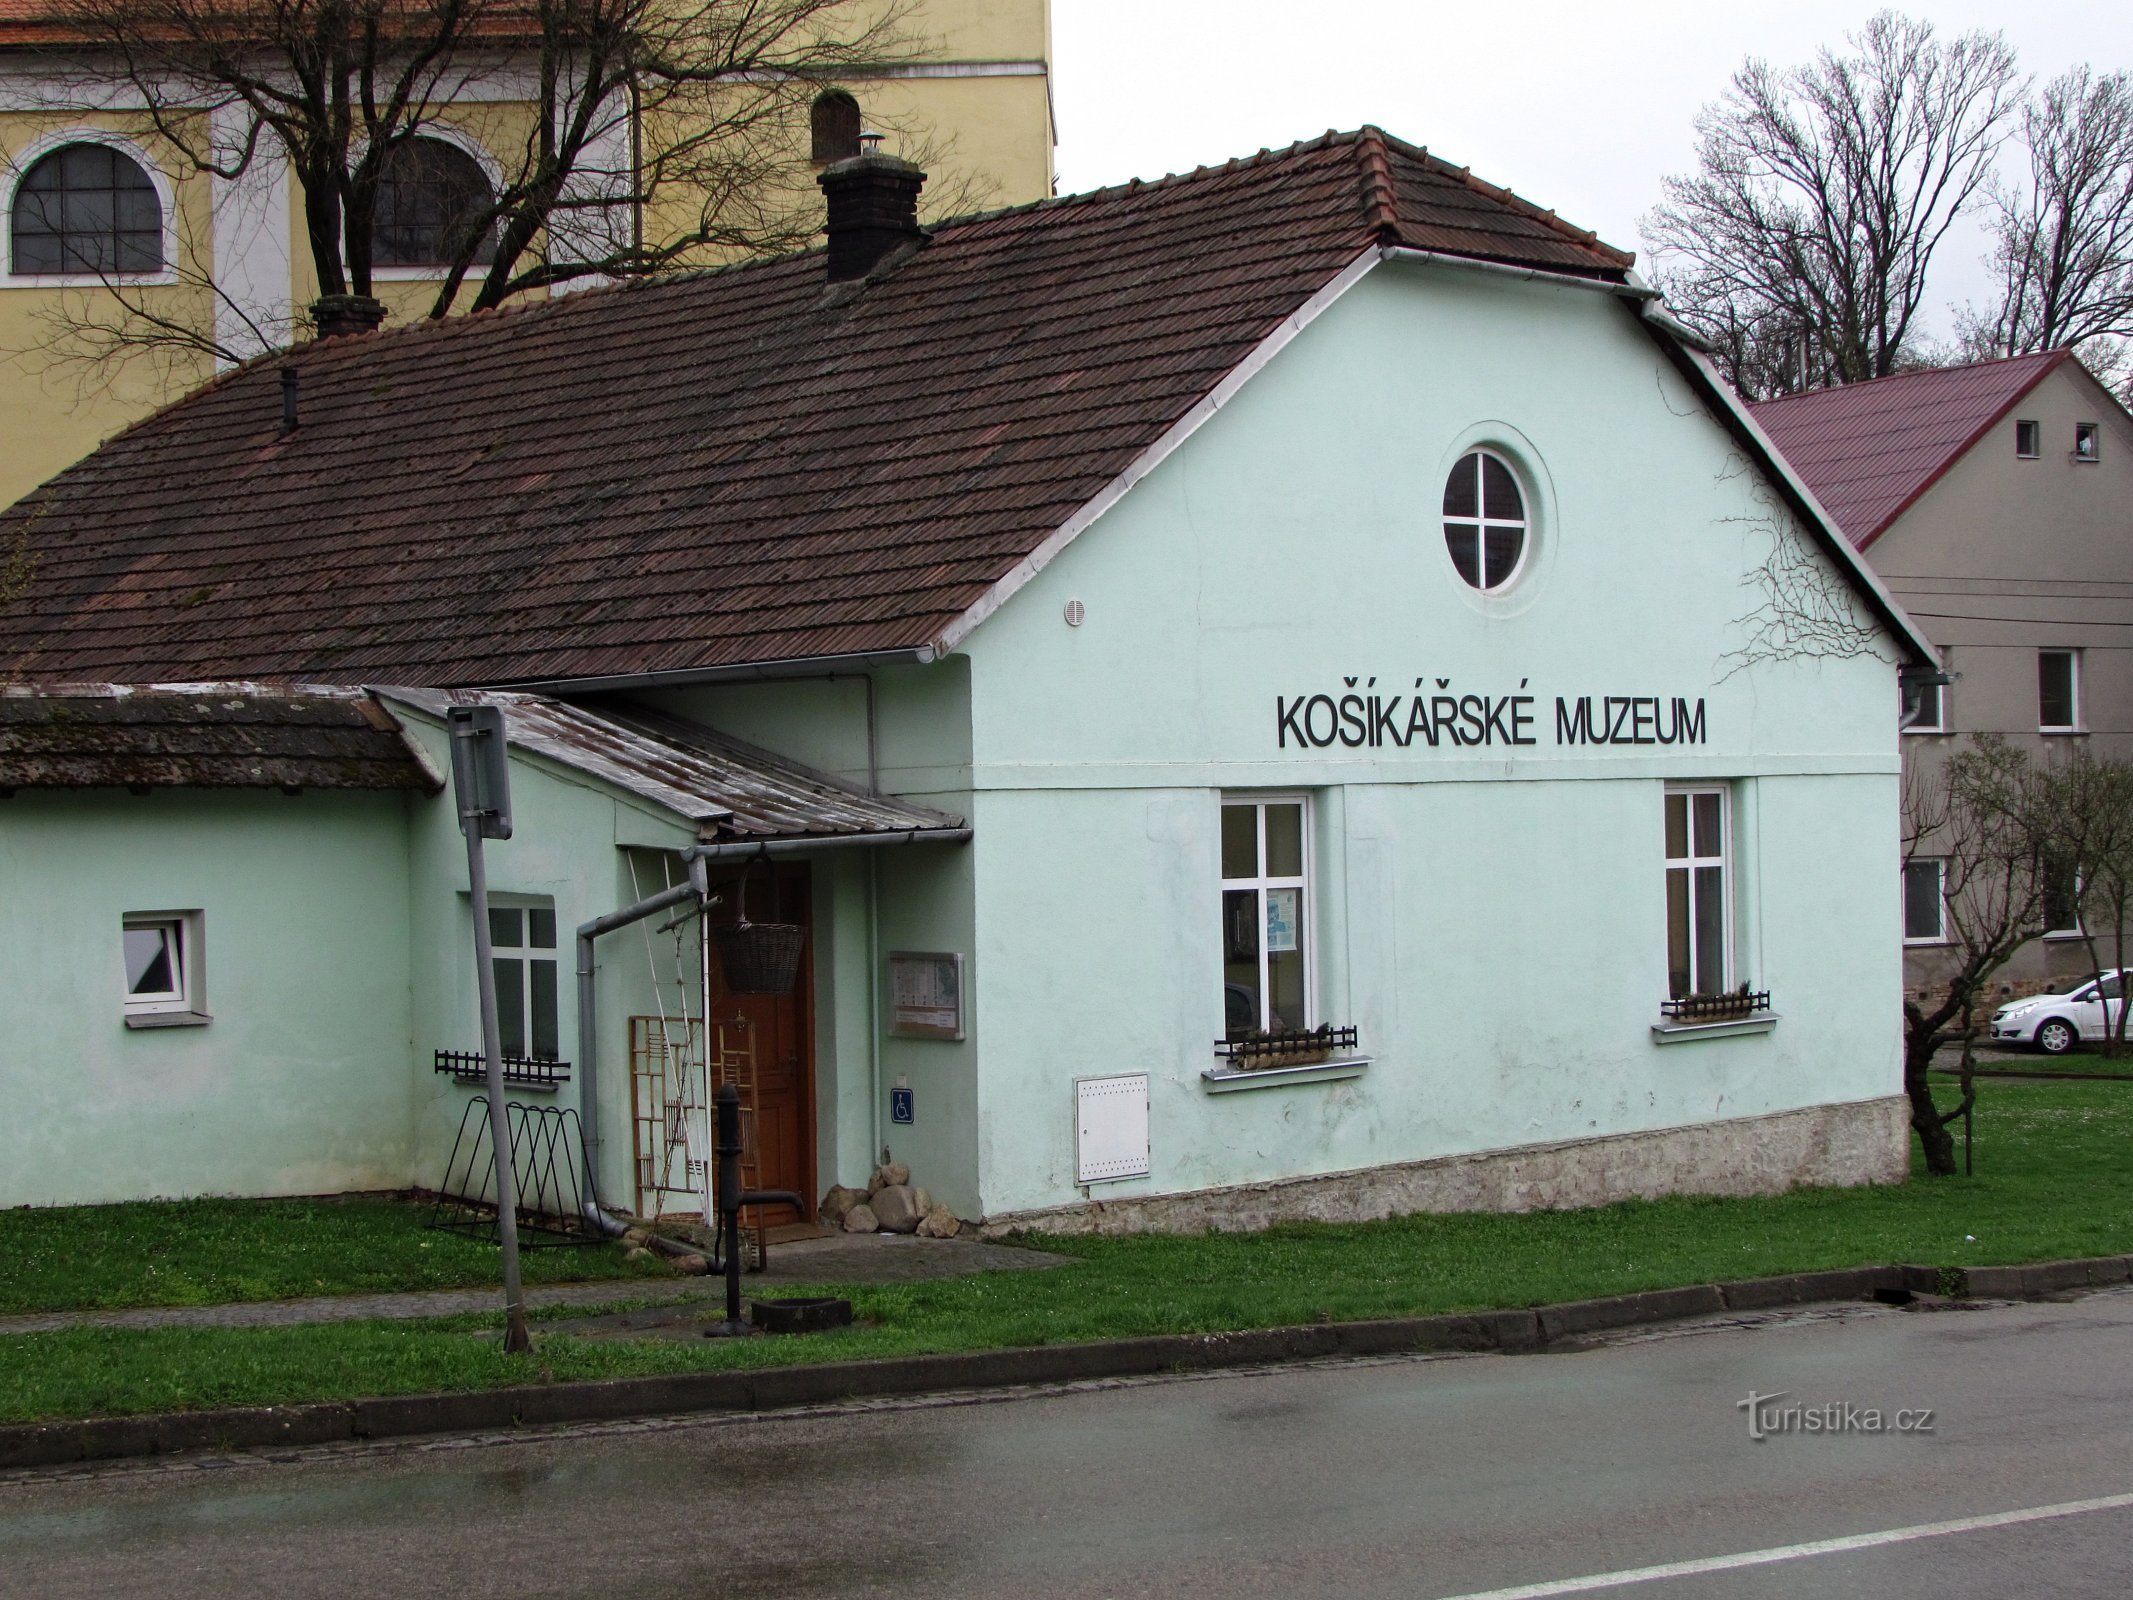 Morkovice Basket Museum